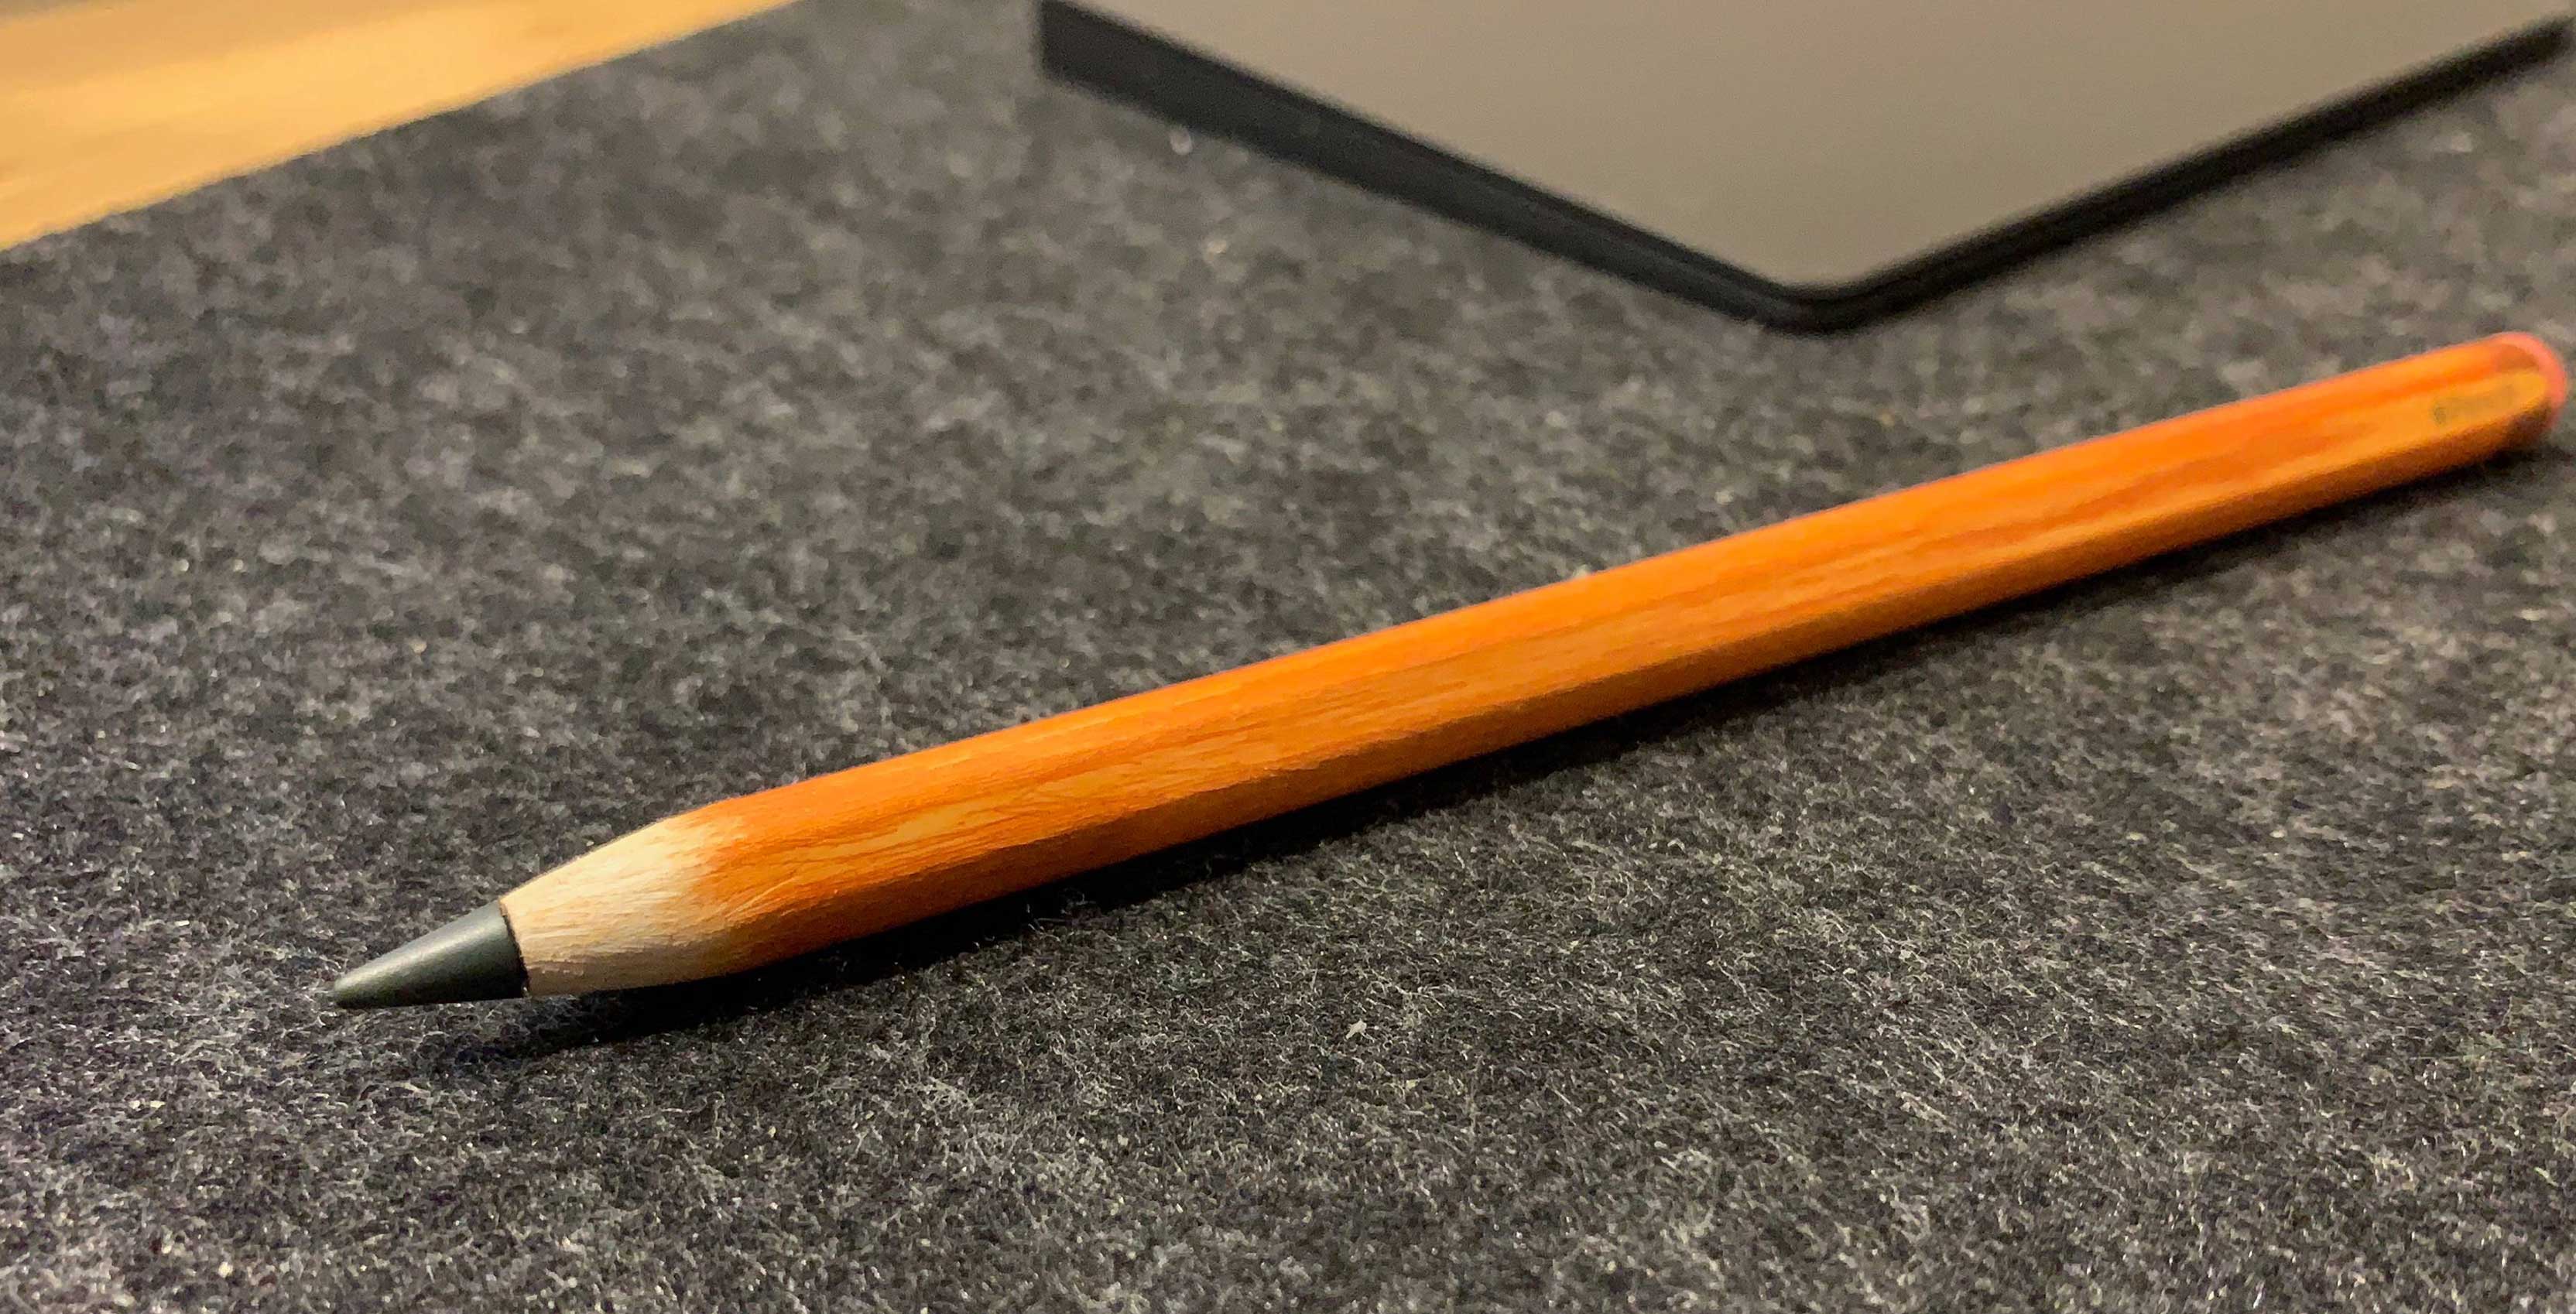 Air pencil. Apple Pencil 2. Wrap Apple Pencil 2. Карандаш обычный. Обычная ручка Apple.